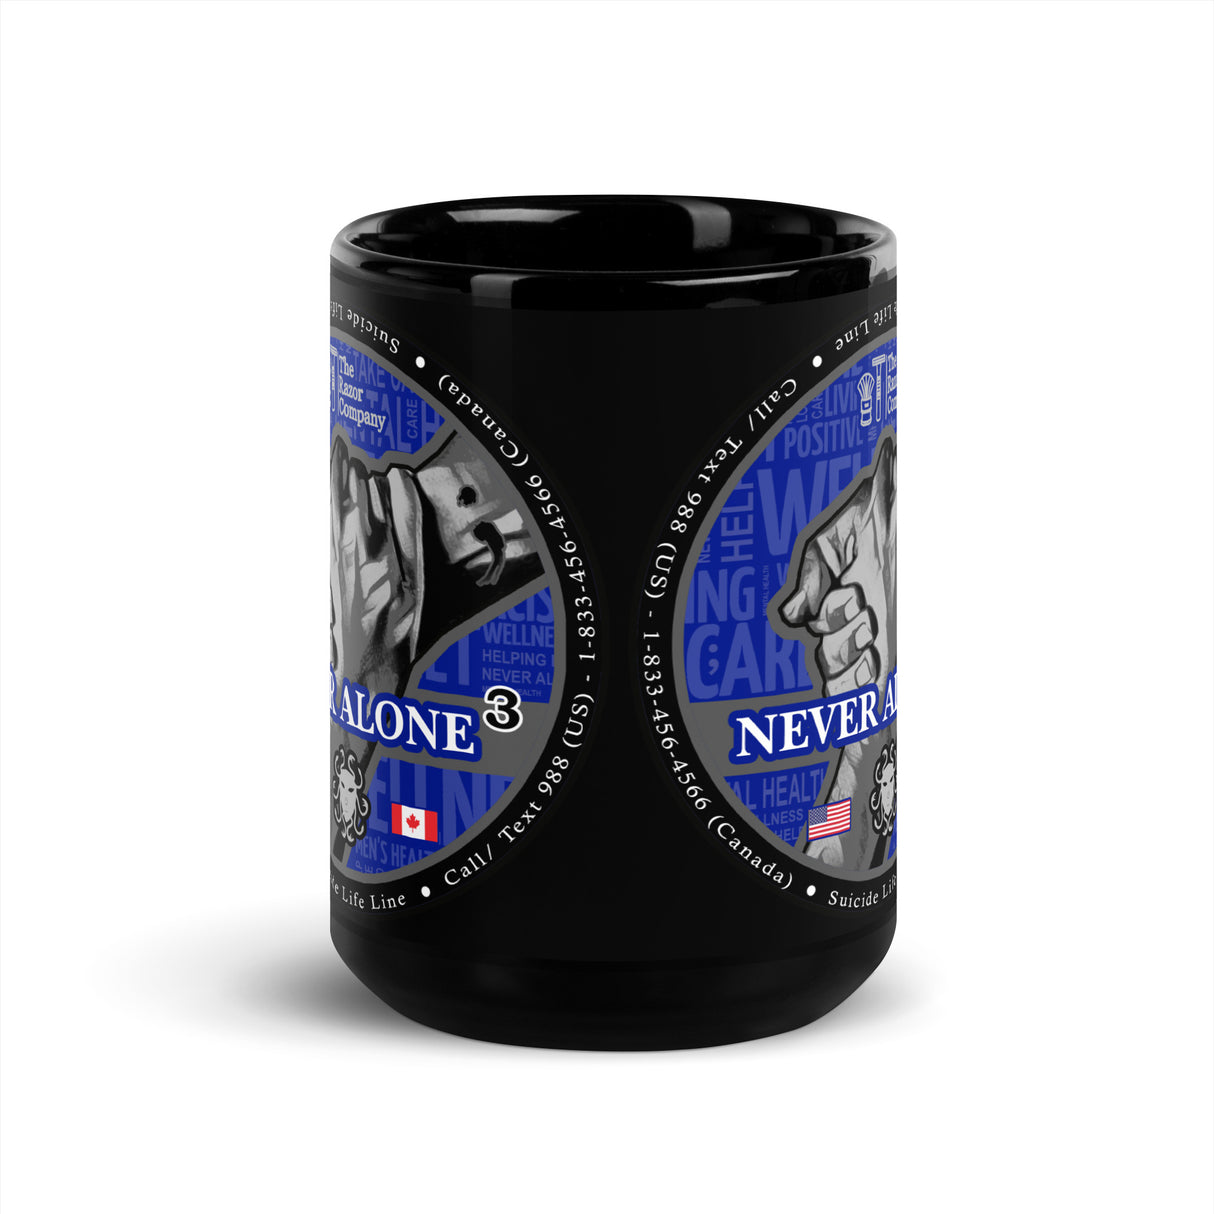 Never Alone - Black Glossy Mug - 15oz